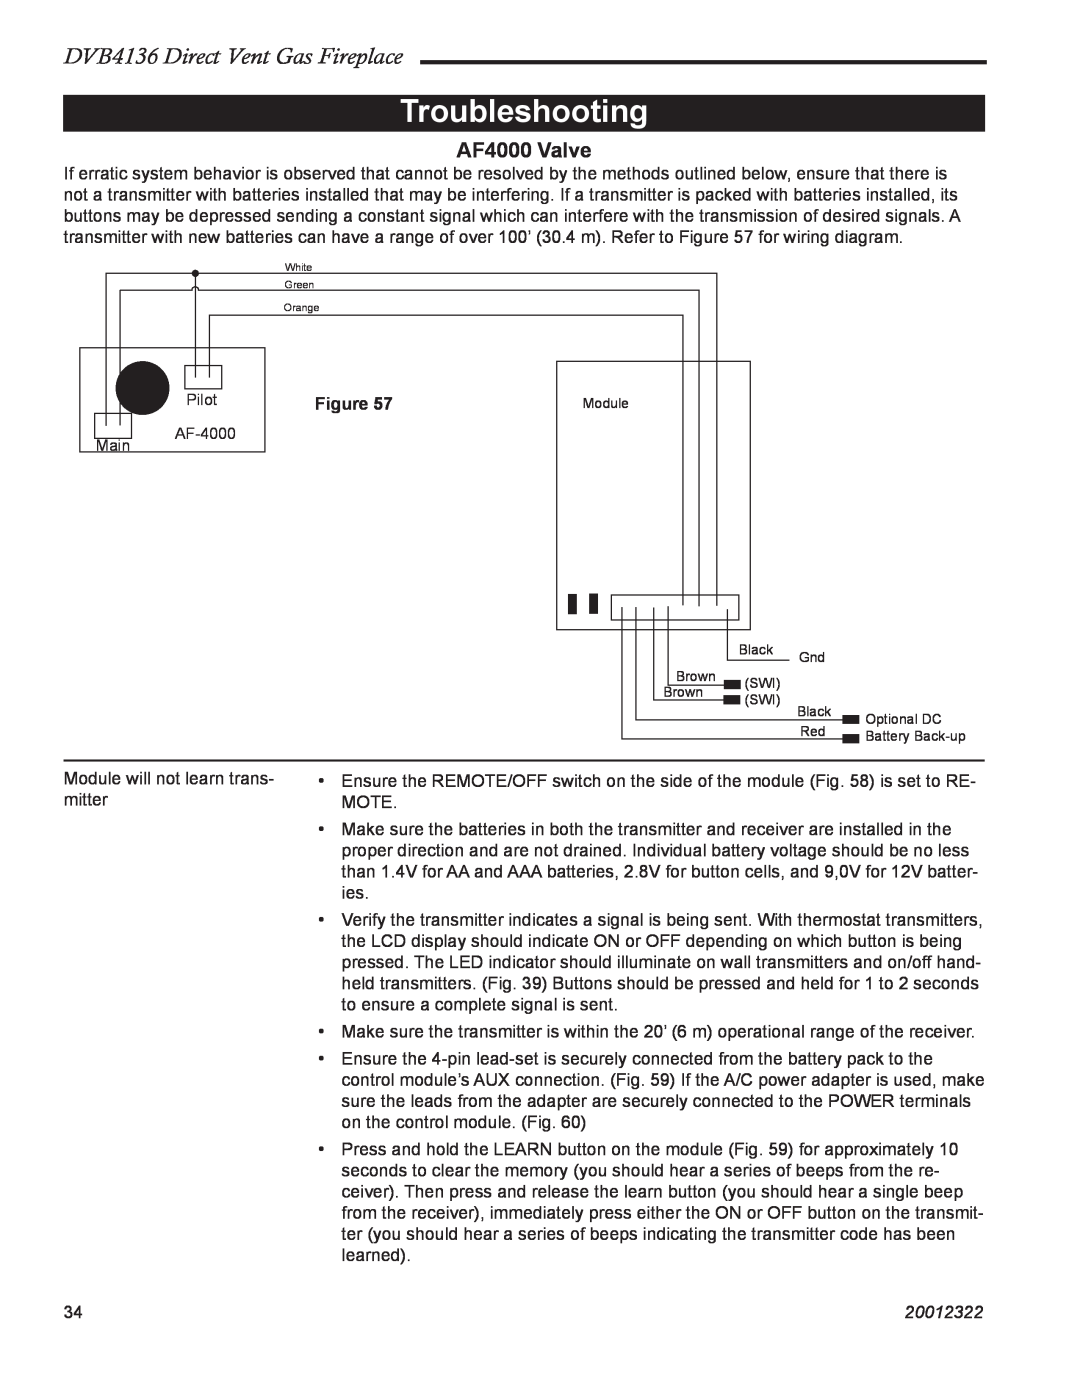 Majestic Appliances manual Troubleshooting, DVB4136 Direct Vent Gas Fireplace, AF4000 Valve, 20012322 